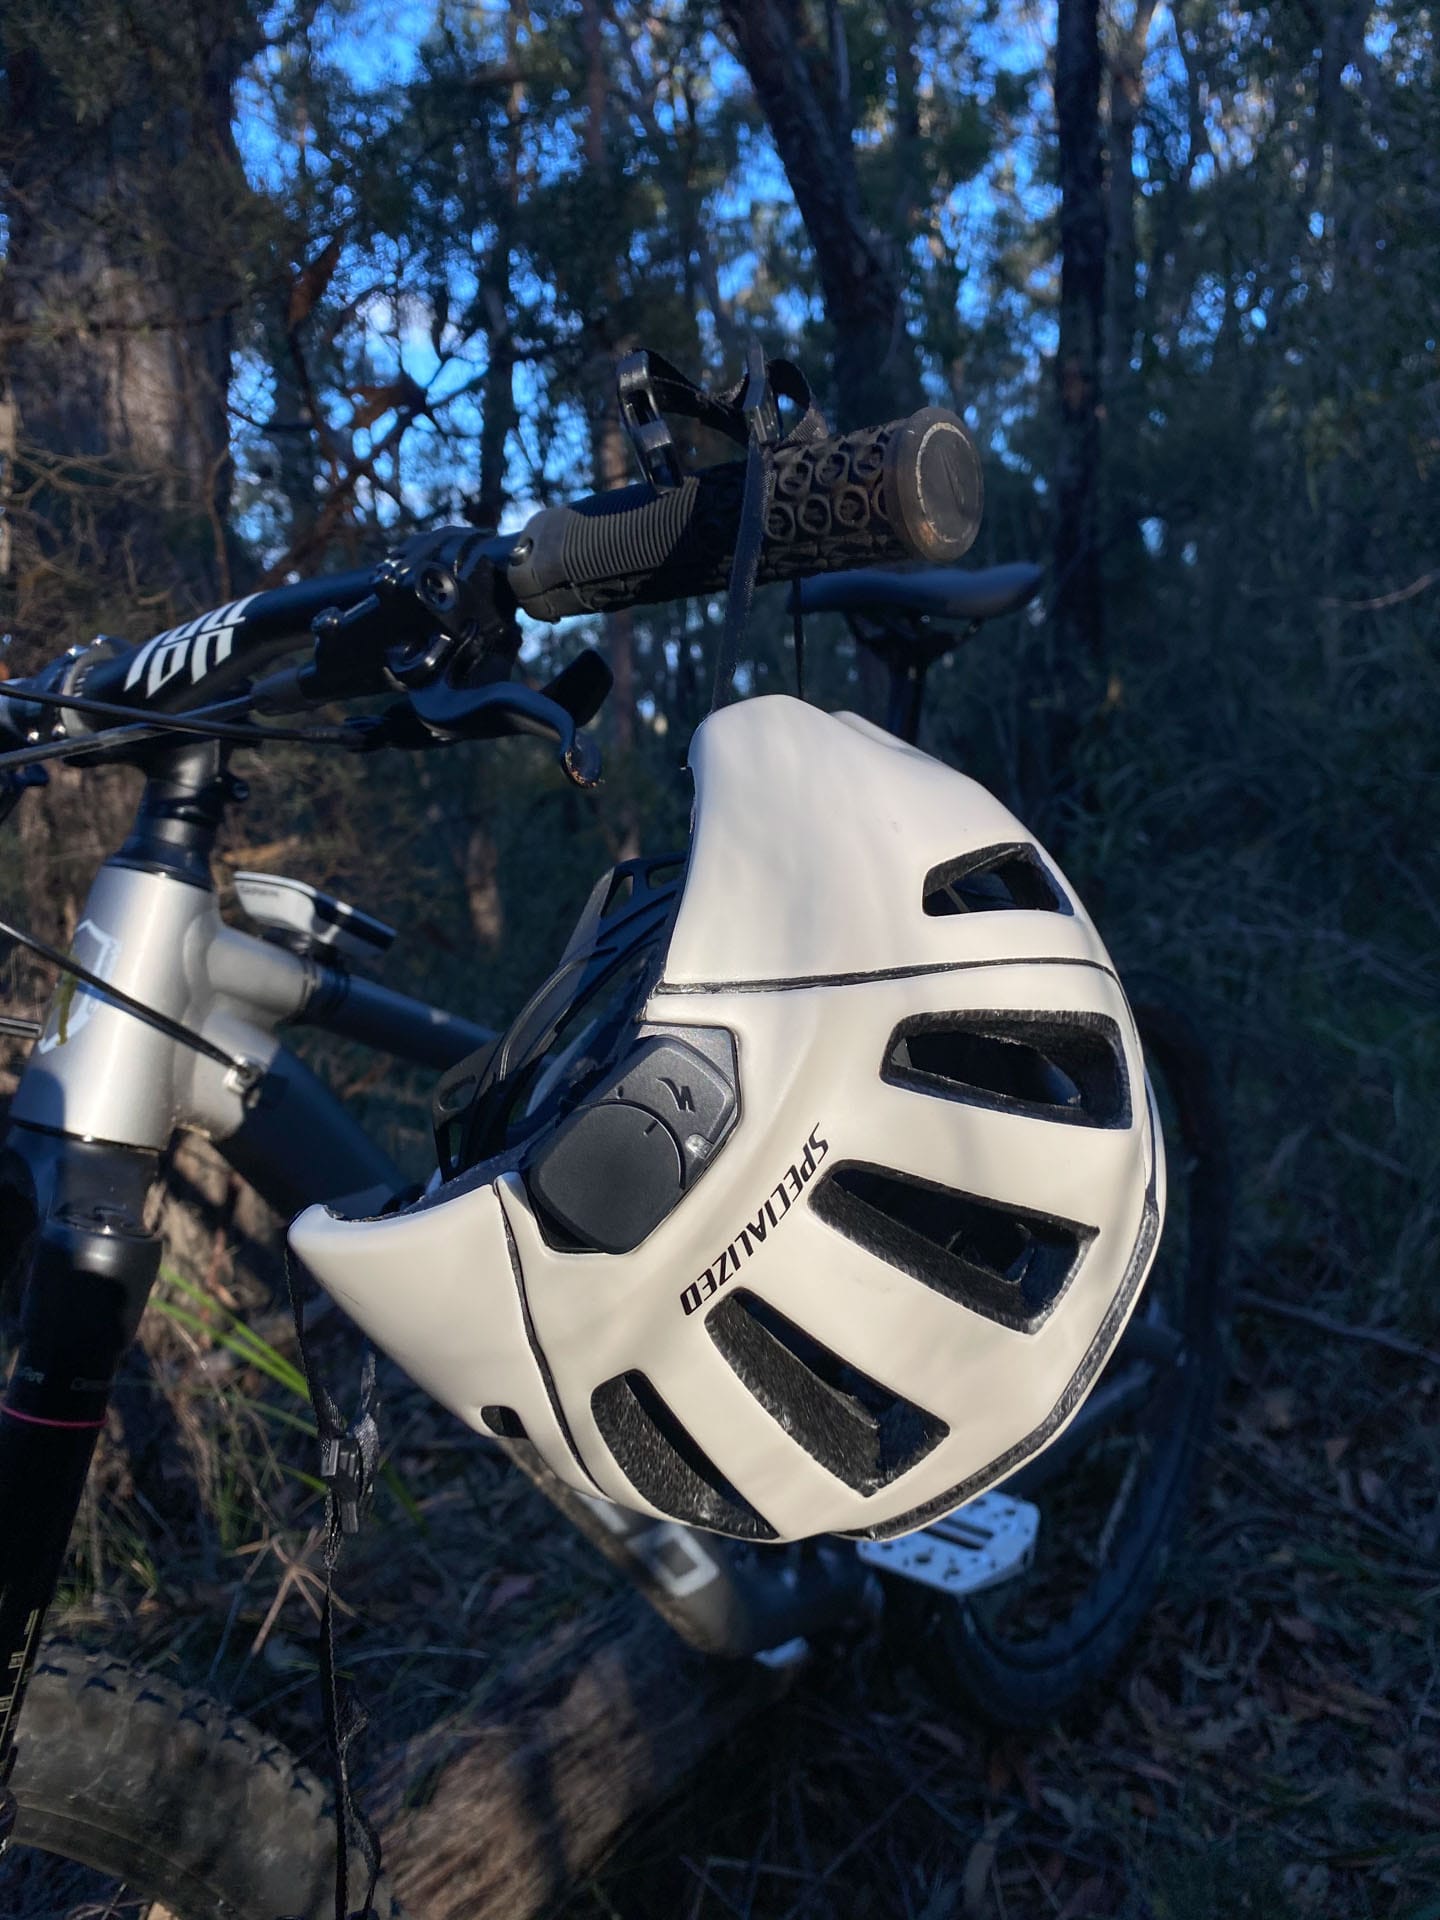 Specialized Ambush with ANGi Mountain Bike Helmet – Gear Review, tim ashelford, lawson trails, blue mountains, nsw